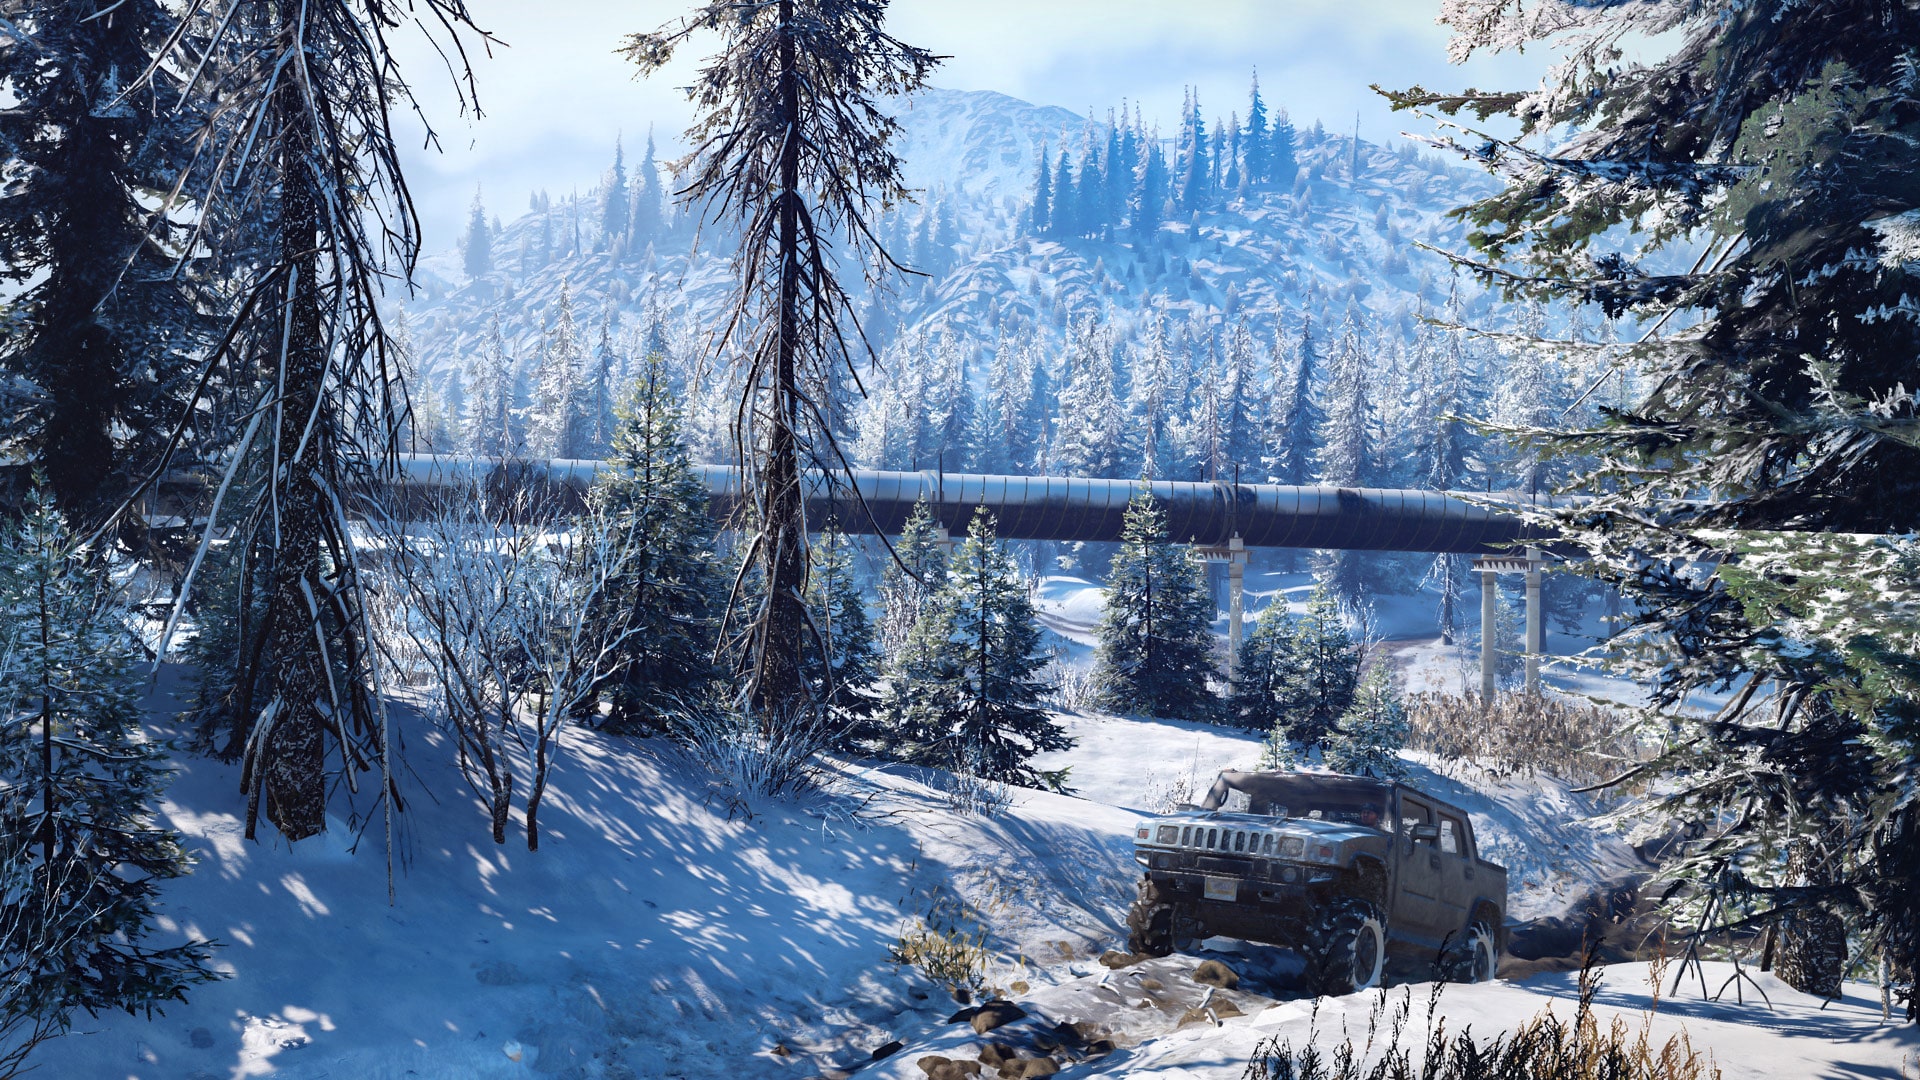 SnowRunner - DLC Anniversary grátis - Epic Games Store